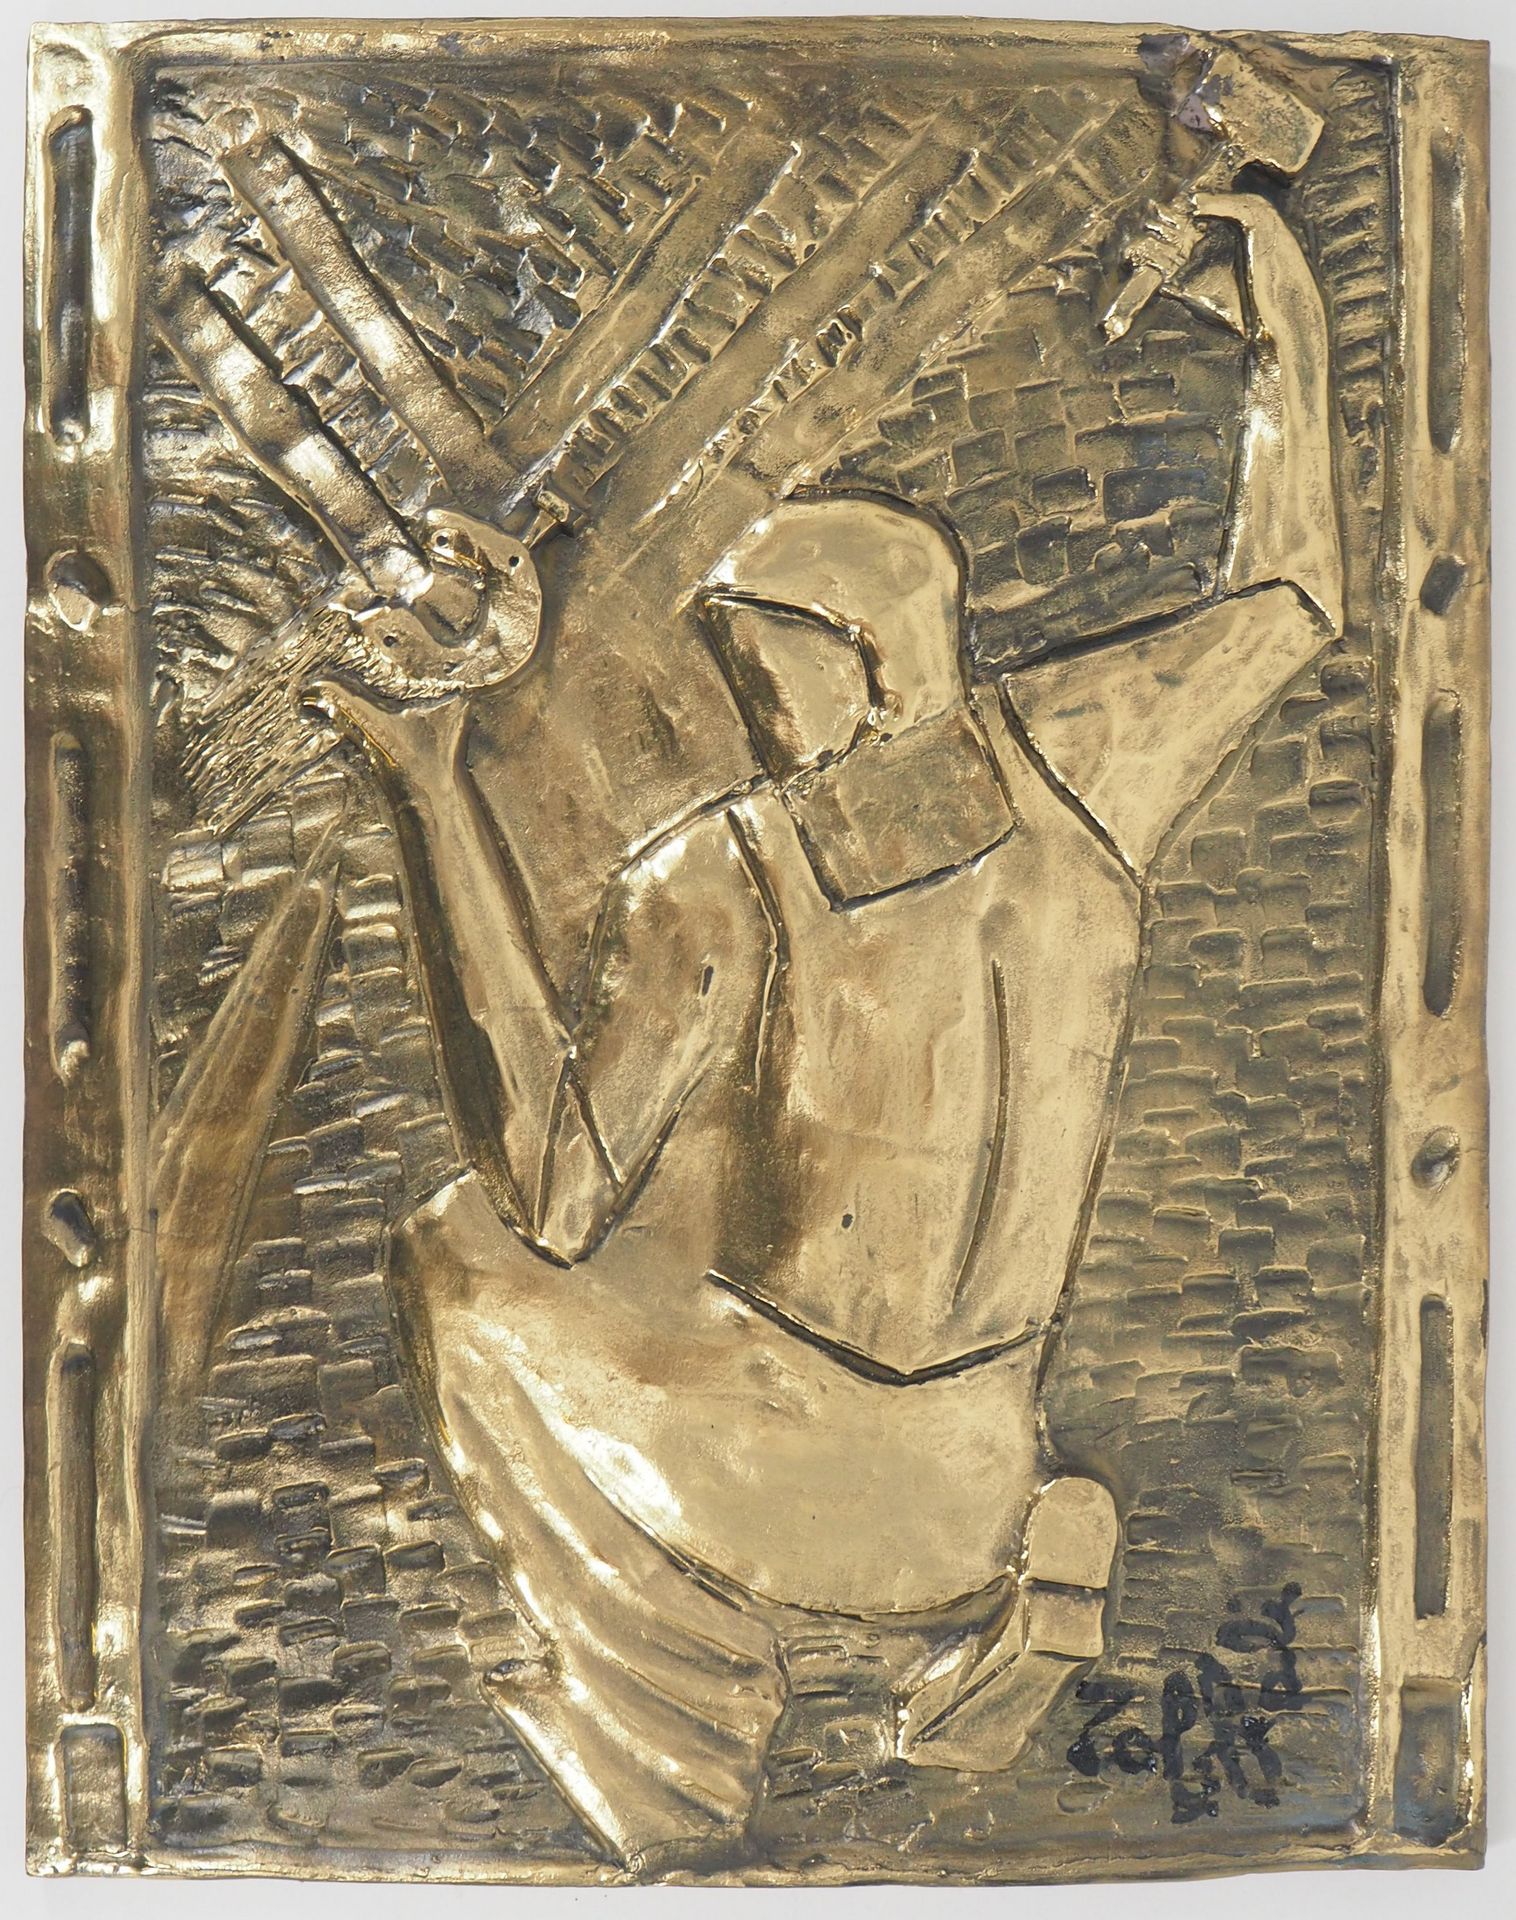 Louis TOFFOLI Louis TOFFOLI

Le Maréchal Ferrant, 1986

Patina bronze bas-relief&hellip;